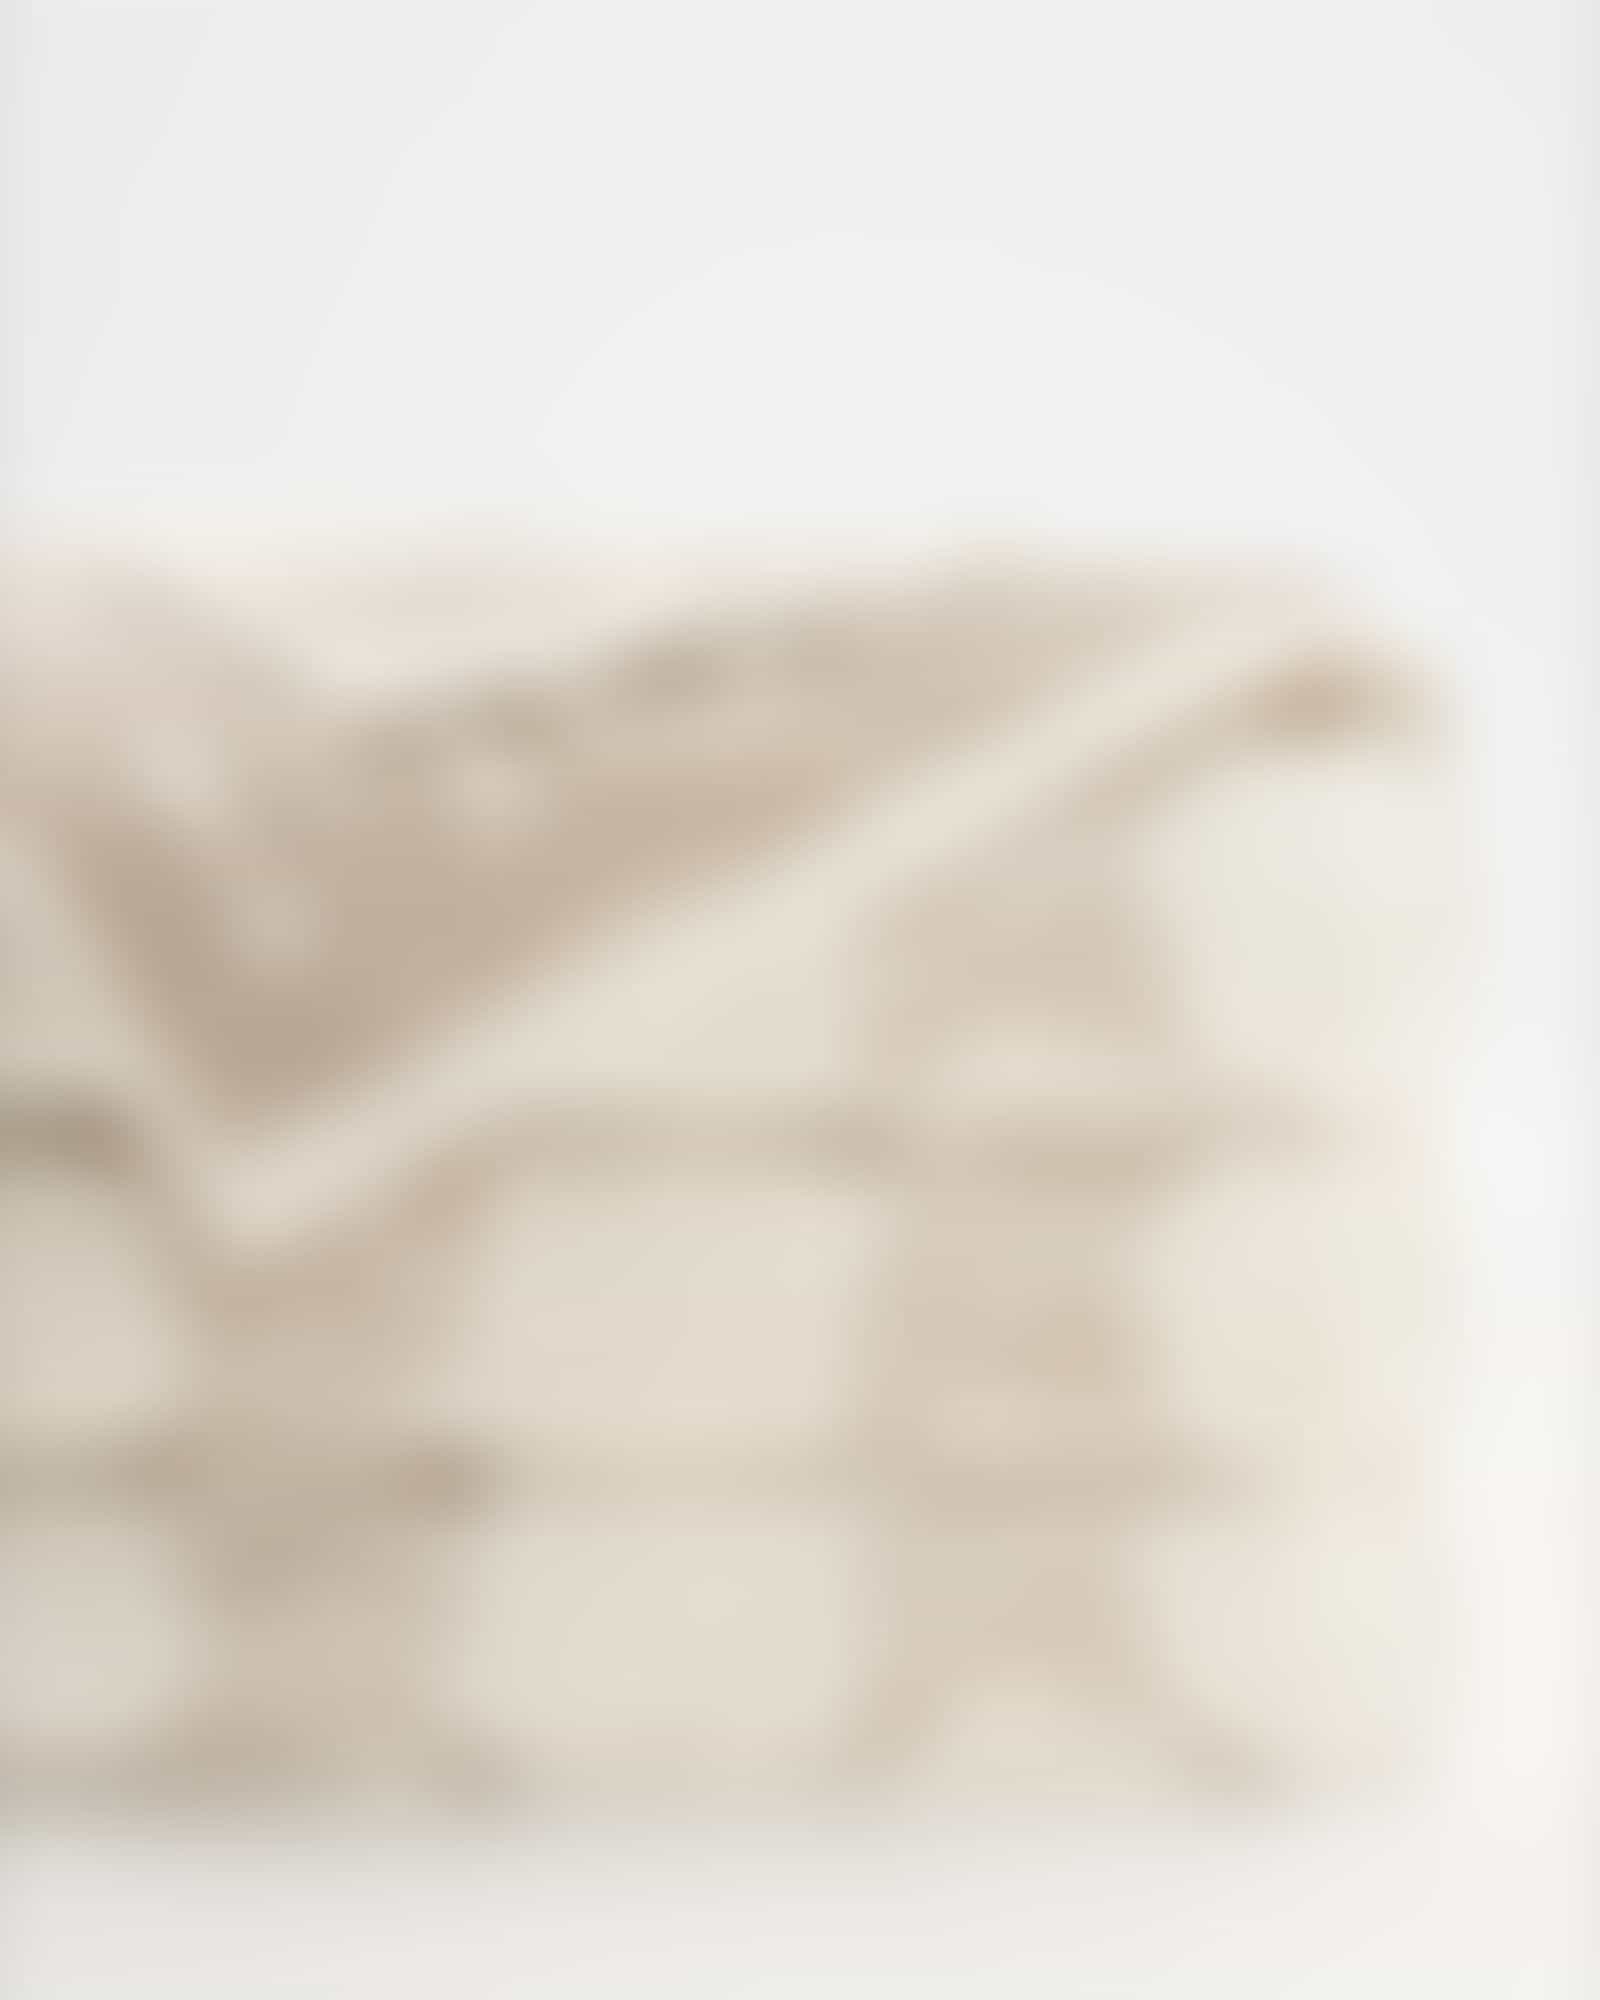 JOOP! Classic - Cornflower 1611 - Farbe: Creme - 36 - Gästetuch 30x50 cm